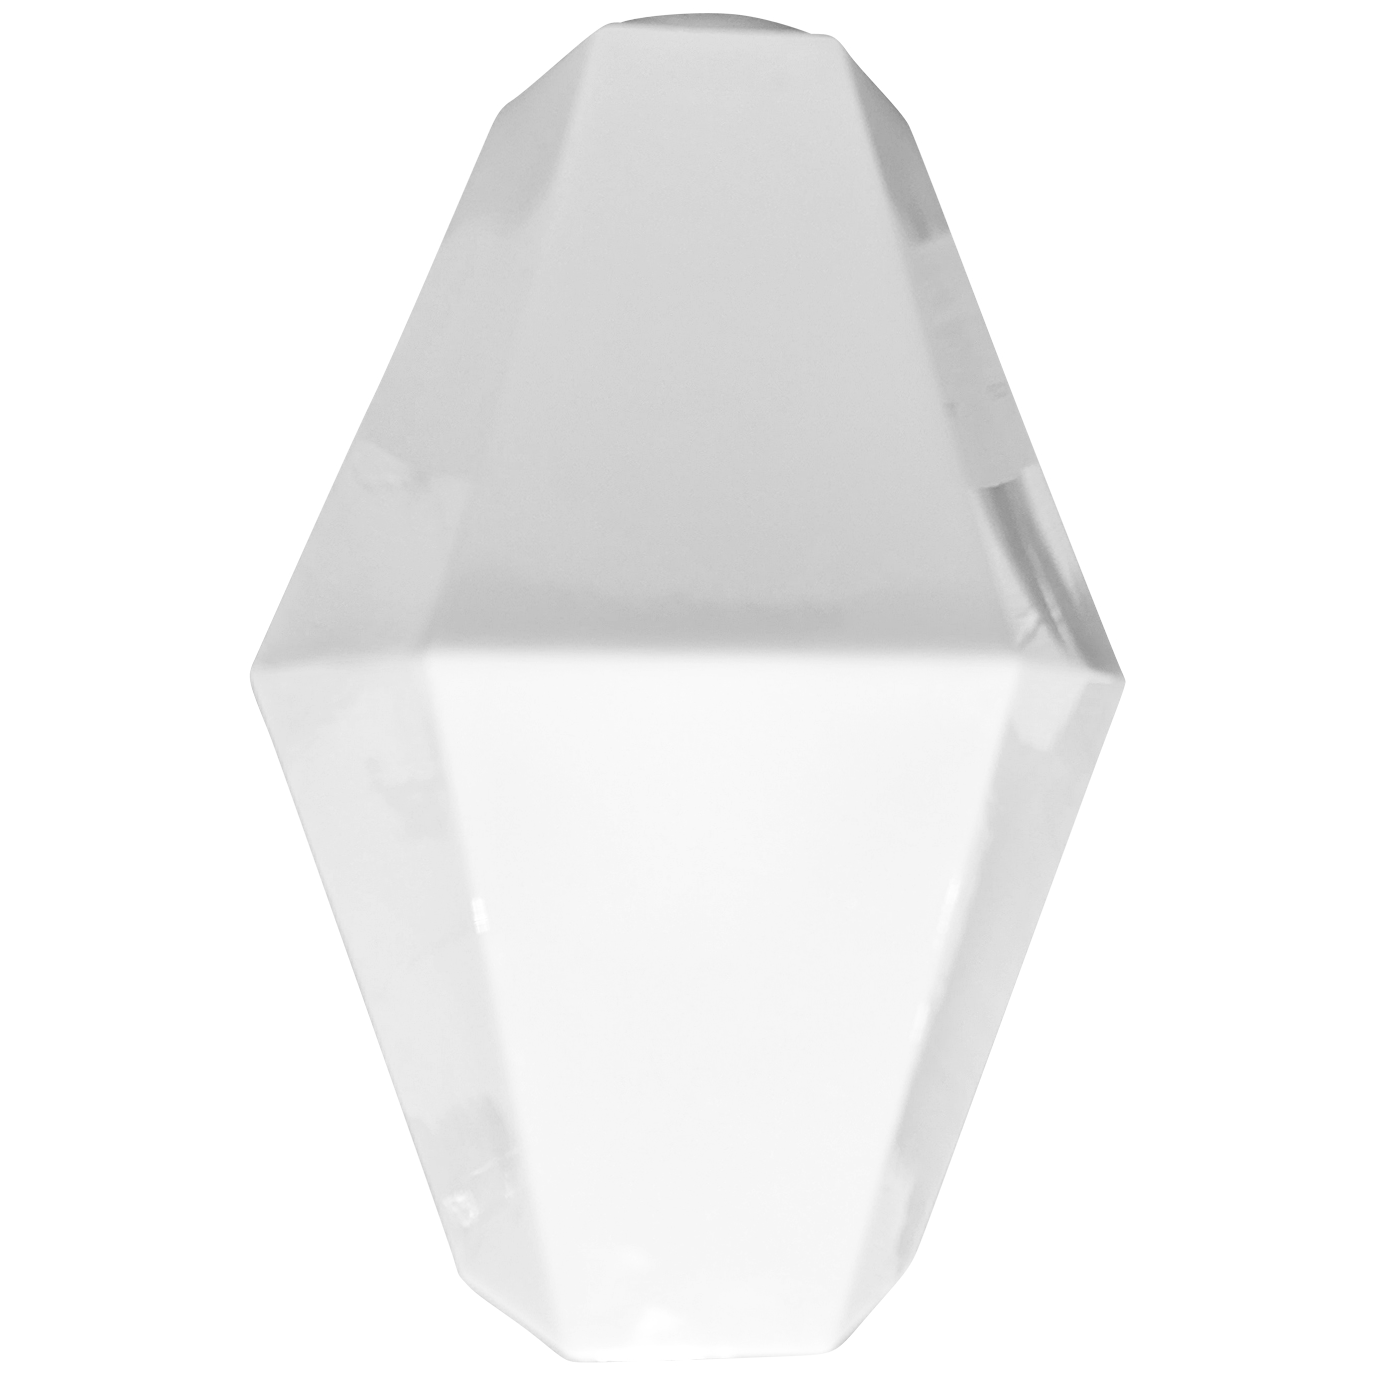 11 1/2 Inch Mid-Century Modern Style Milk Glass Light Shade (4 Inch Fitter)